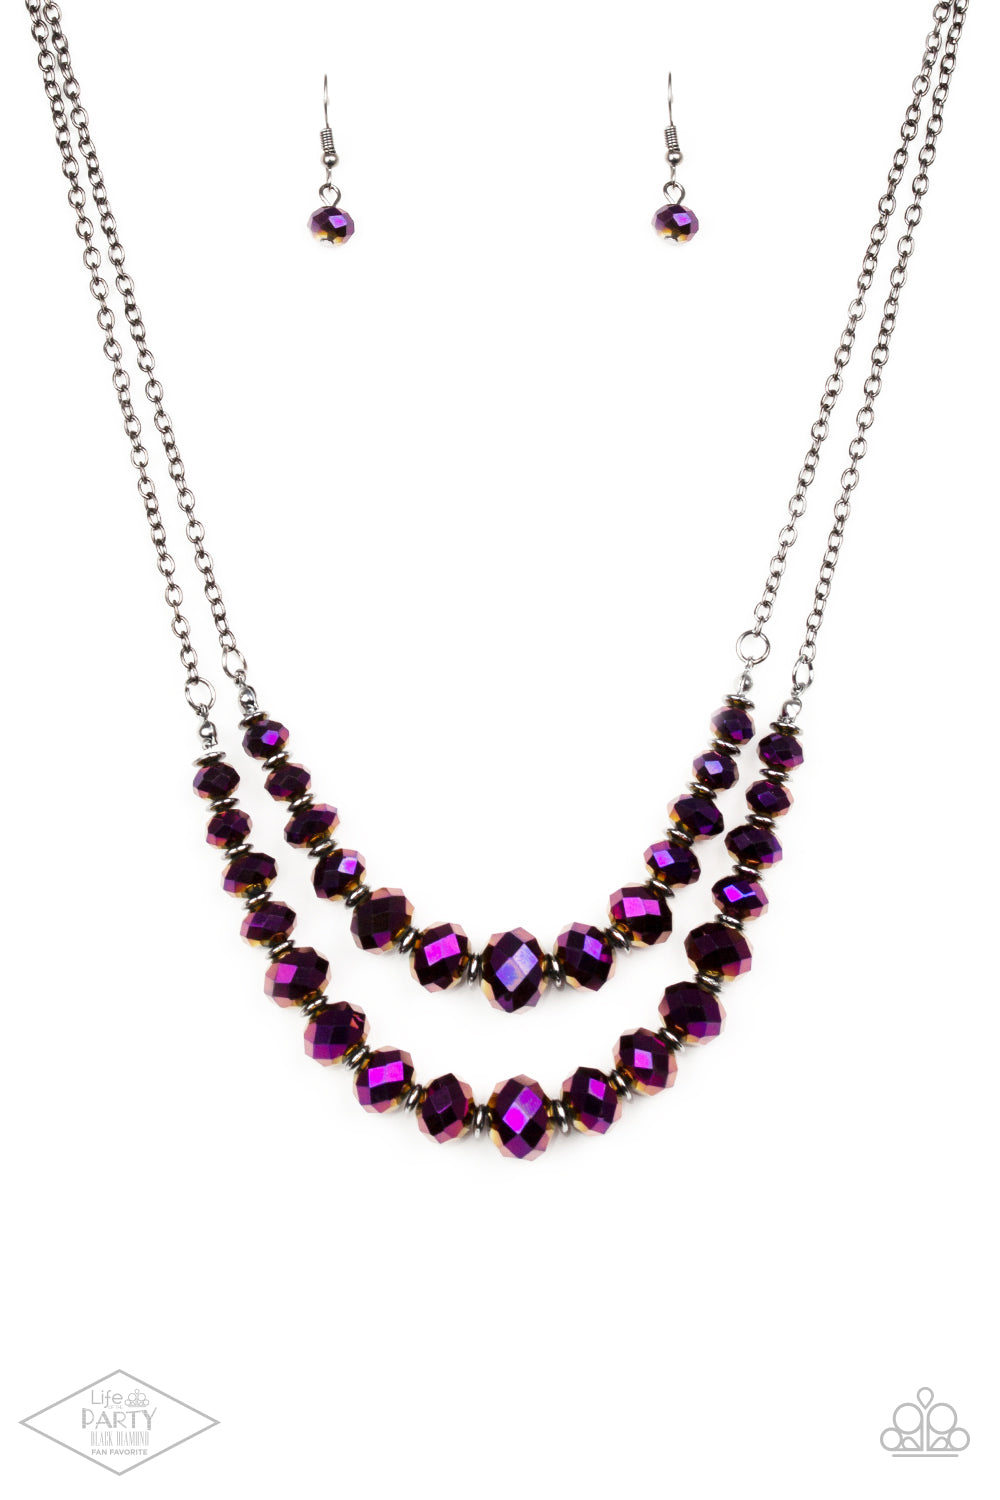 Strikingly Spellbinding Purple Necklace